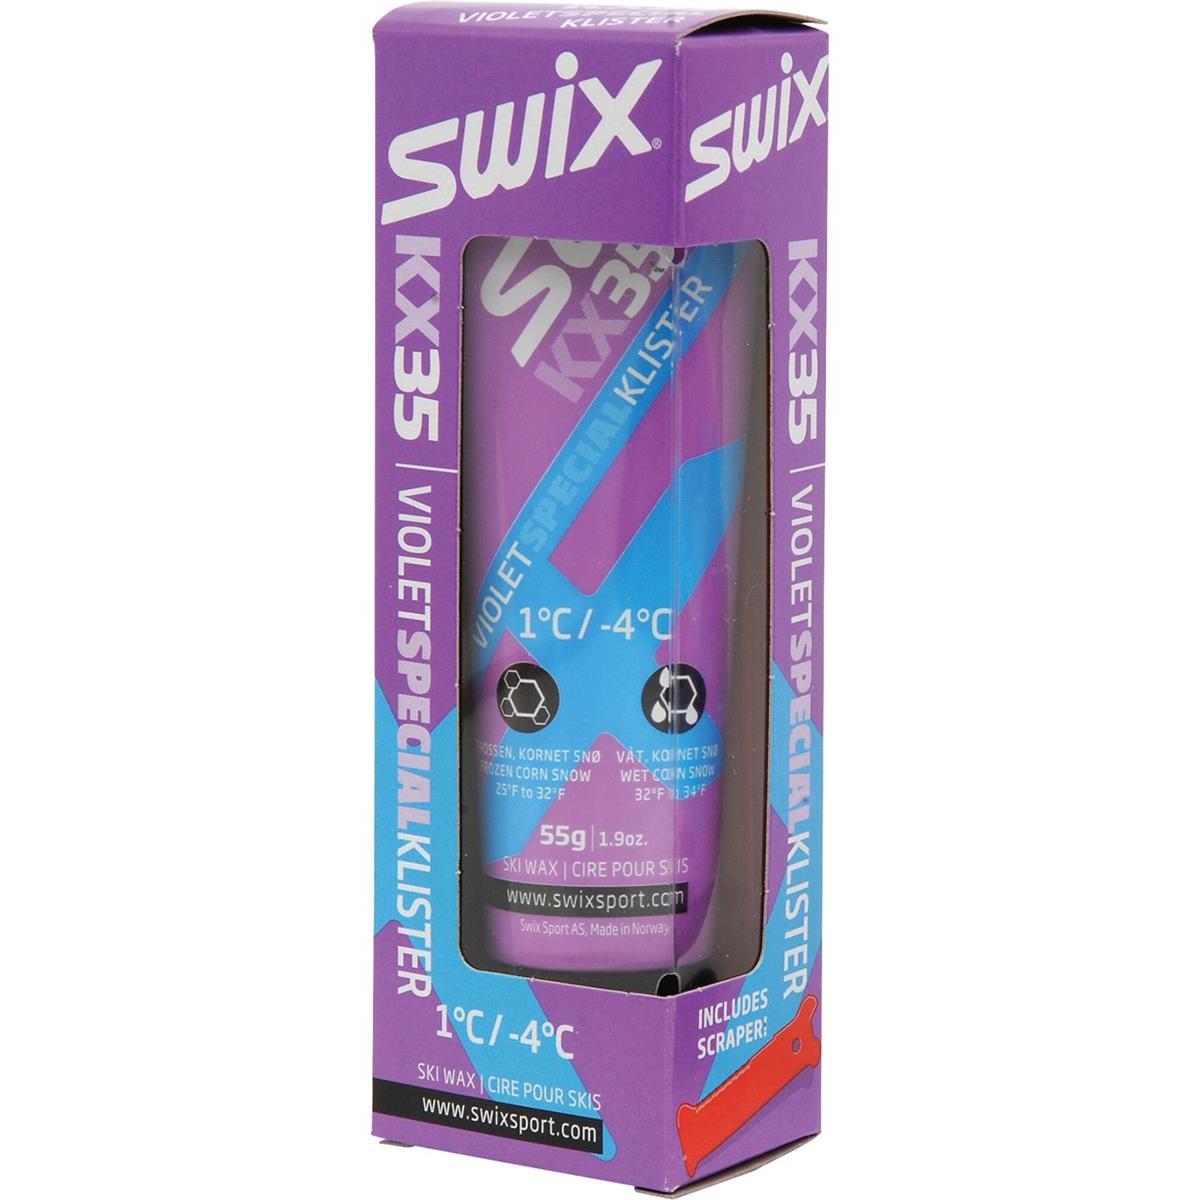 Swix KX35 Violet Spec.Klister 55g 1/-4°C